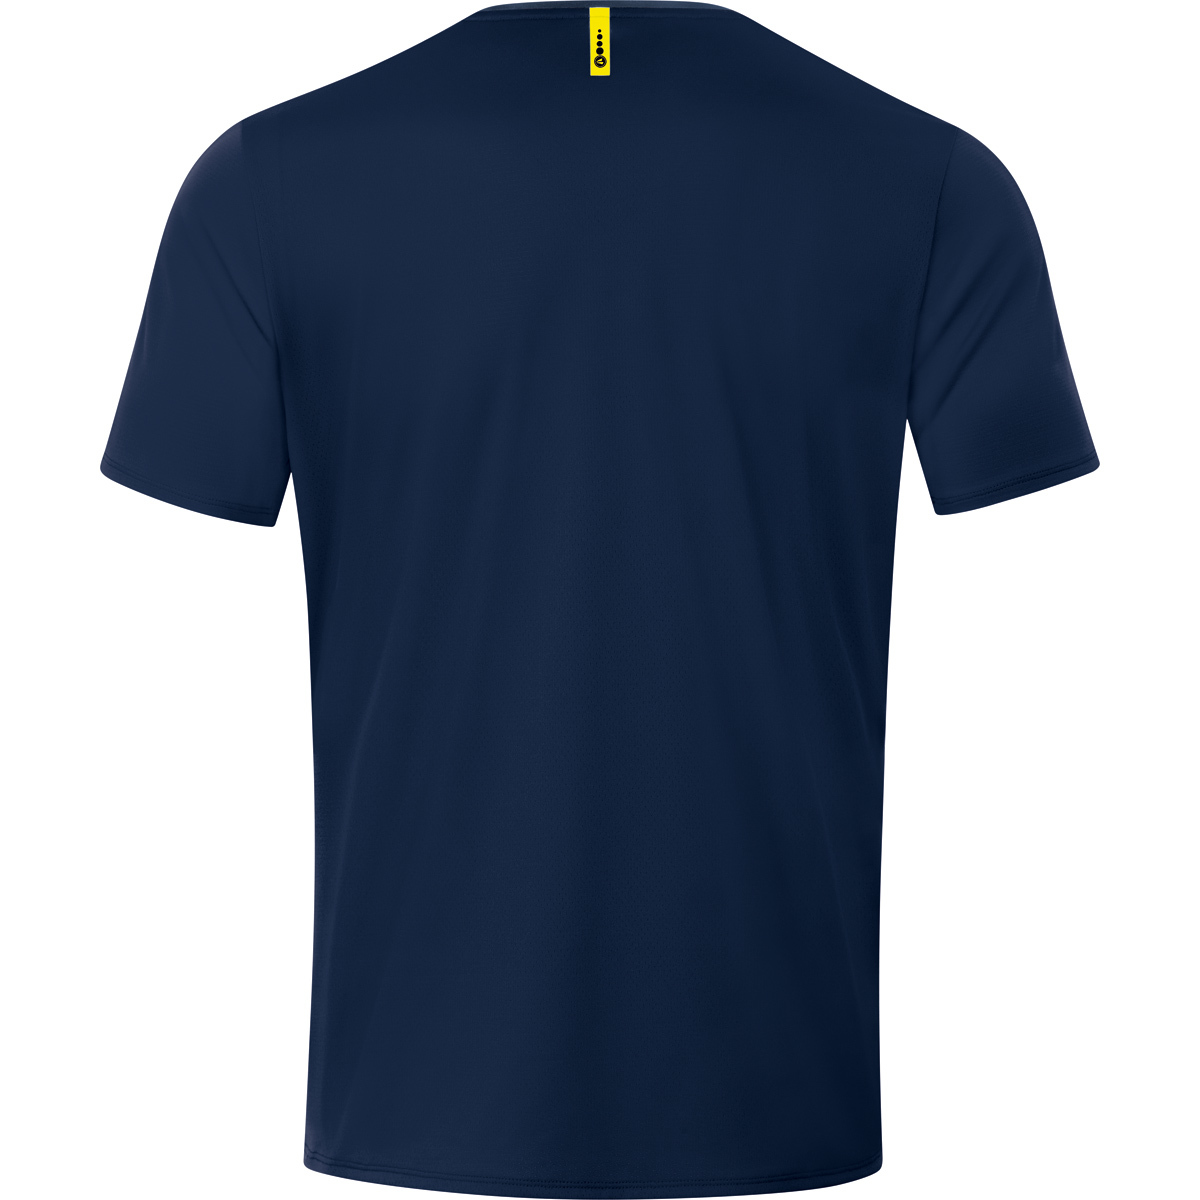 JAKO T-Shirt Champ 2.0 marine/darkblue/neongelb, Gr. Herren, 6120 S